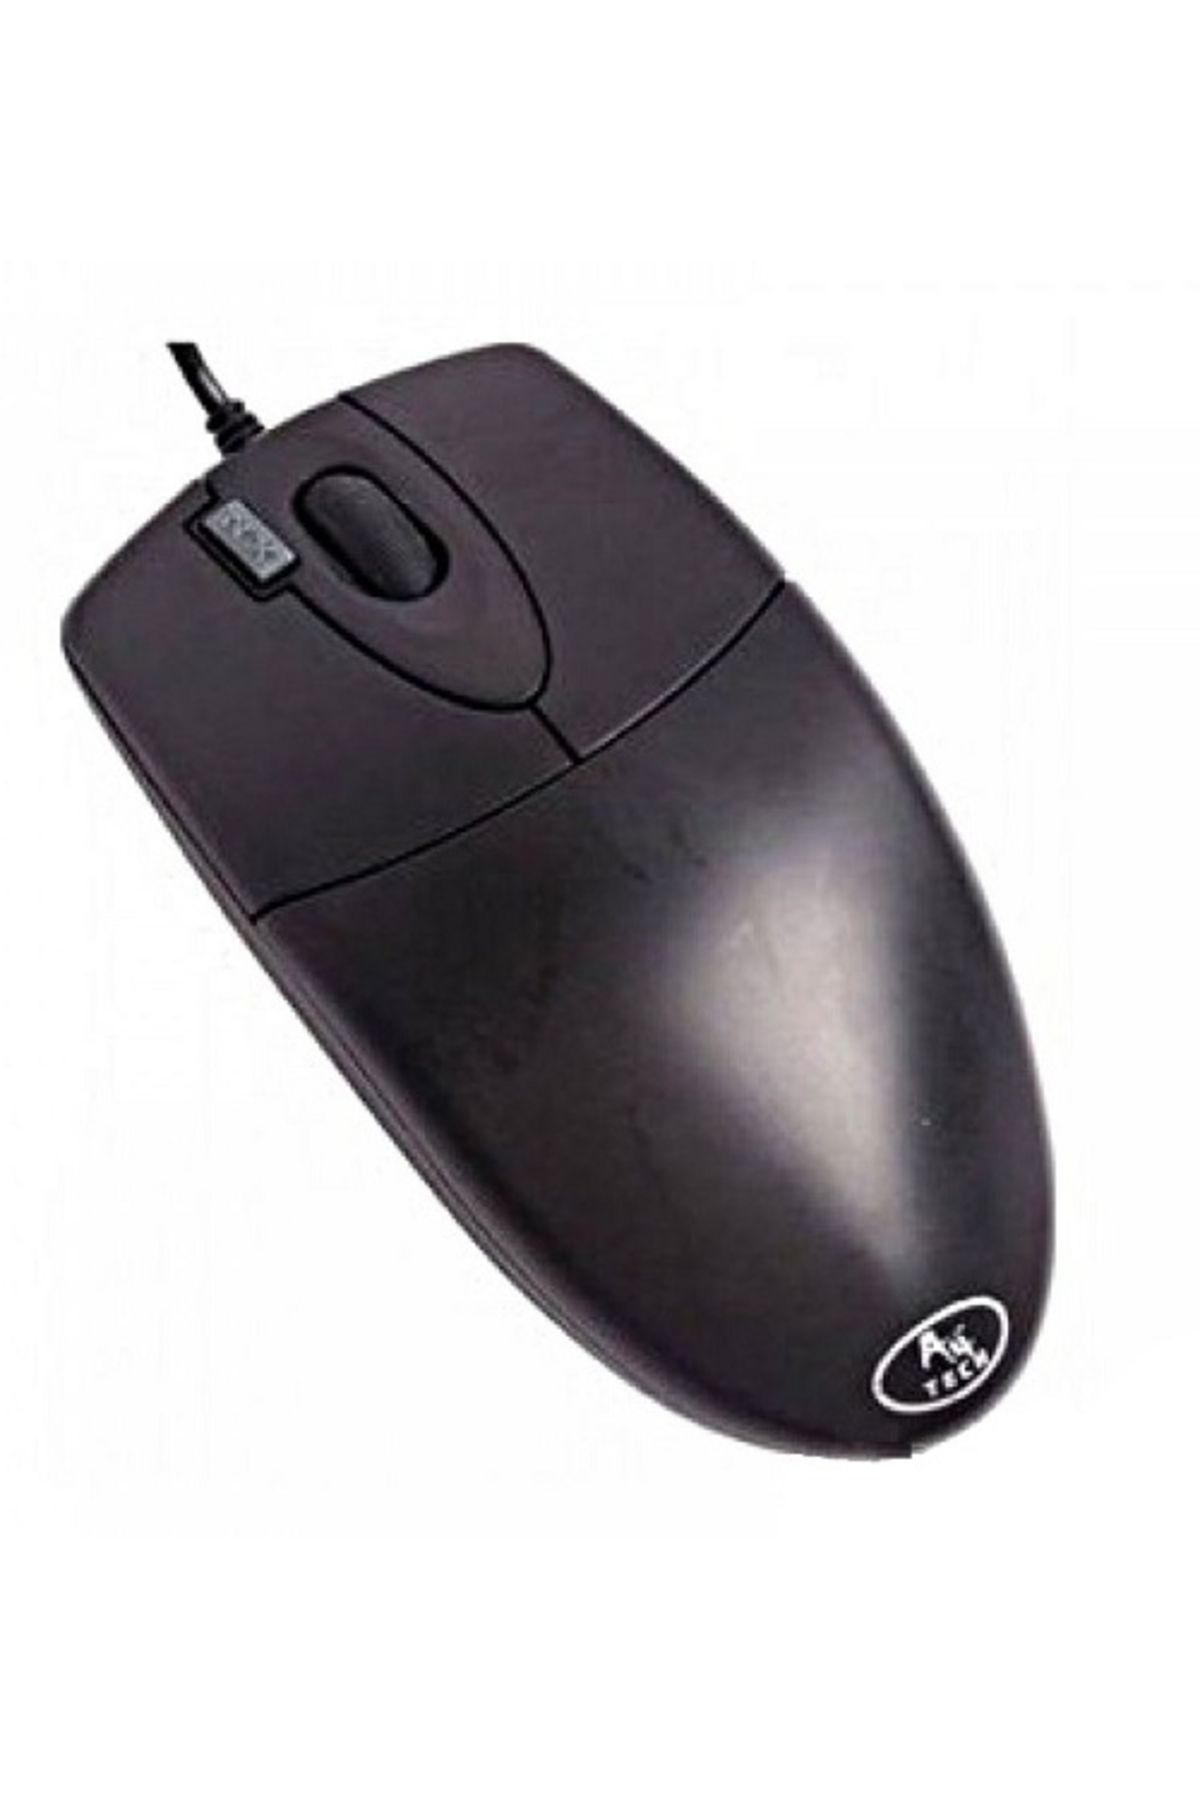 A4 Tech Op620d-b 800dpı 3 Tuş Optik Mouse